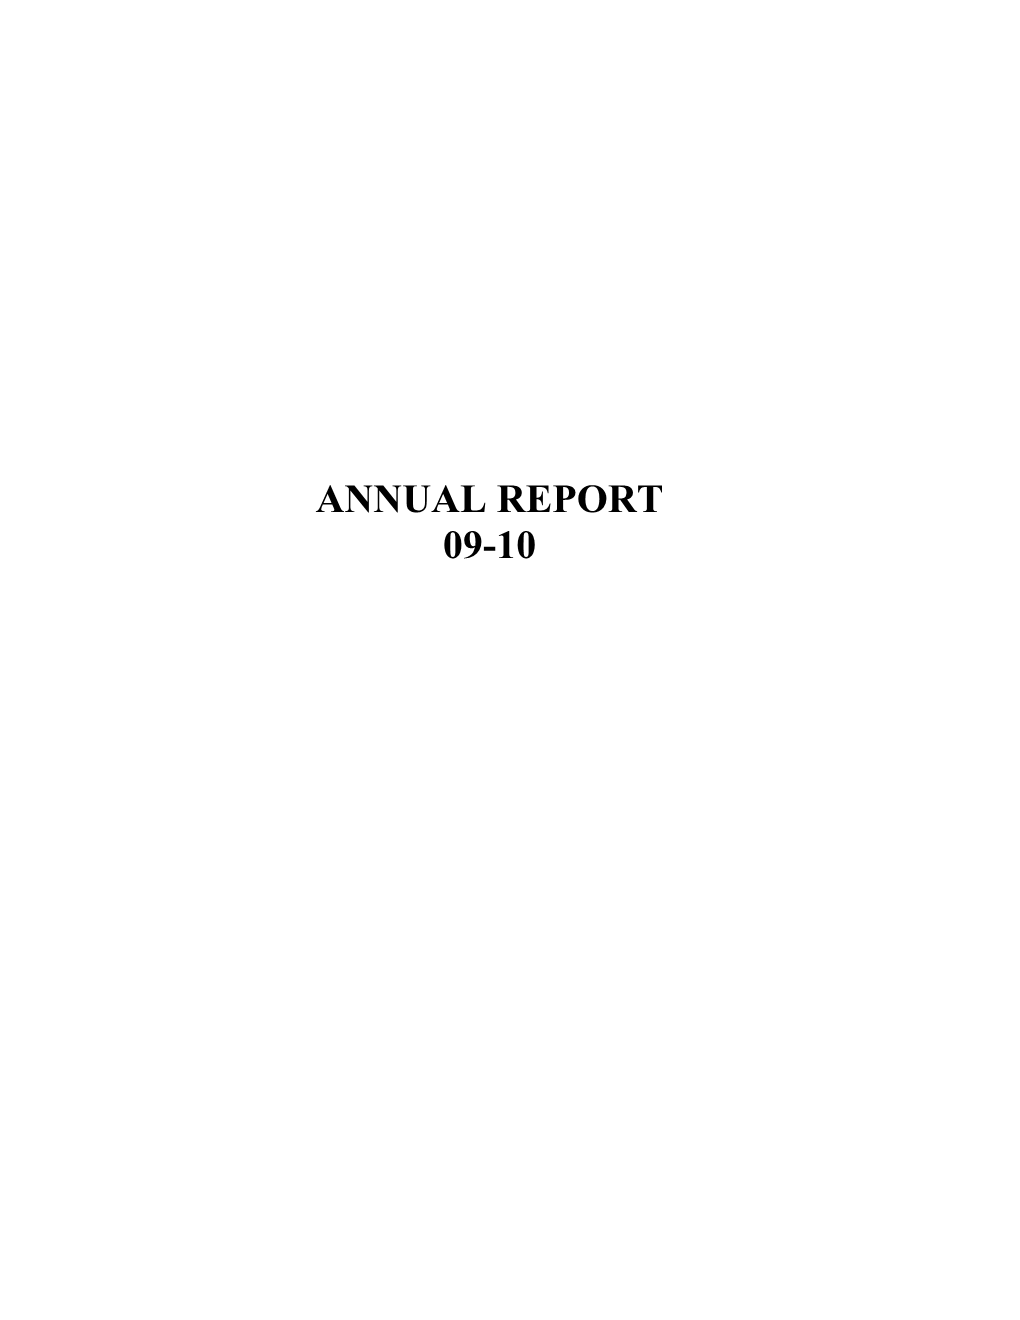 Annual Report 09-10